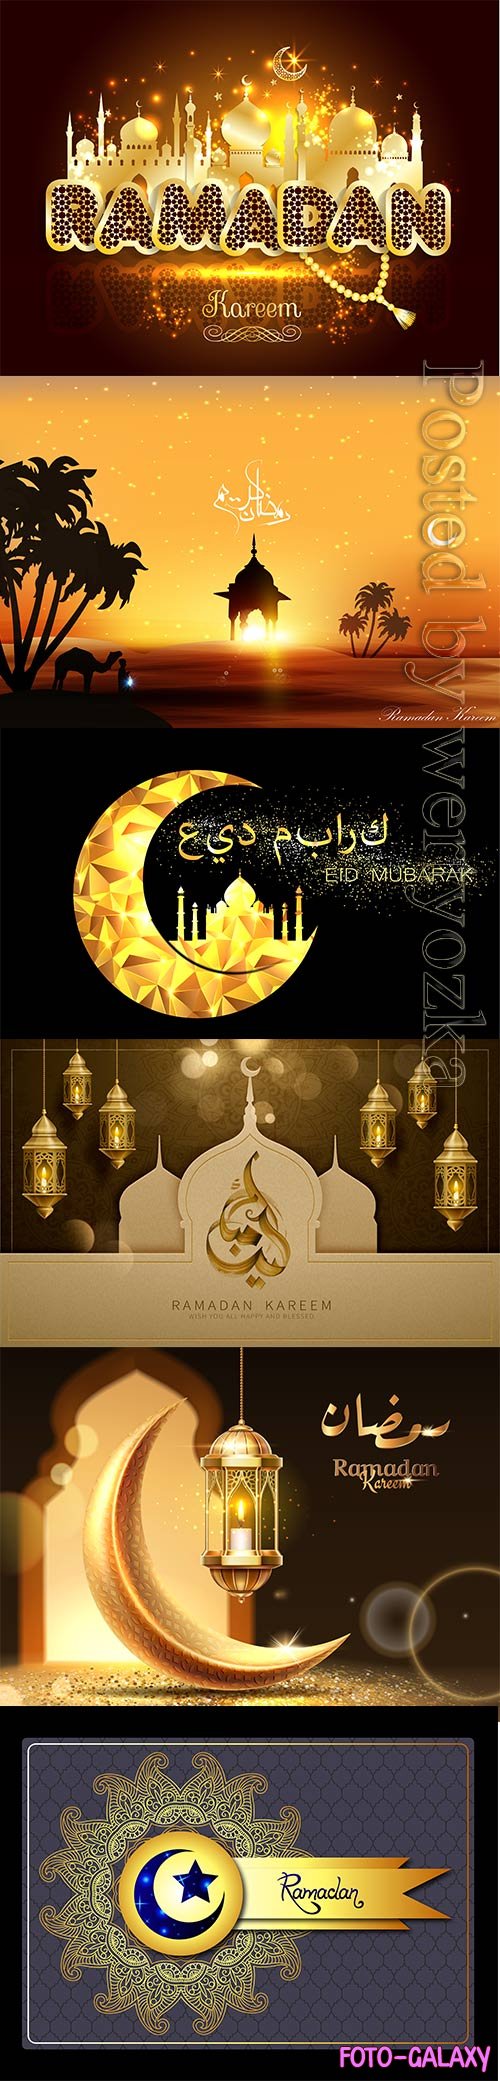 Ramadan kareem, eid mubarak vector illustration